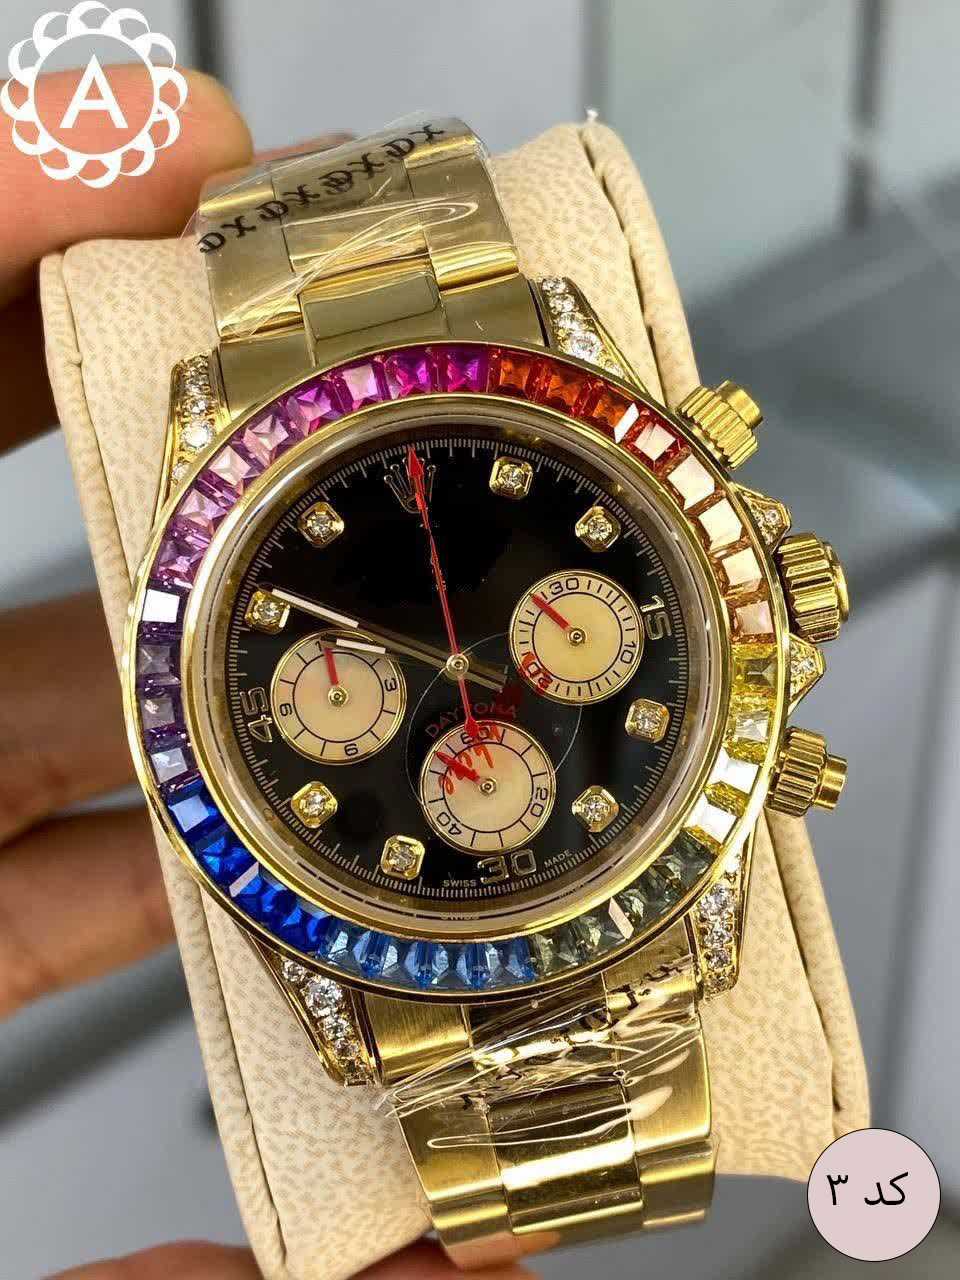 Walar tasarımı Rolex saat